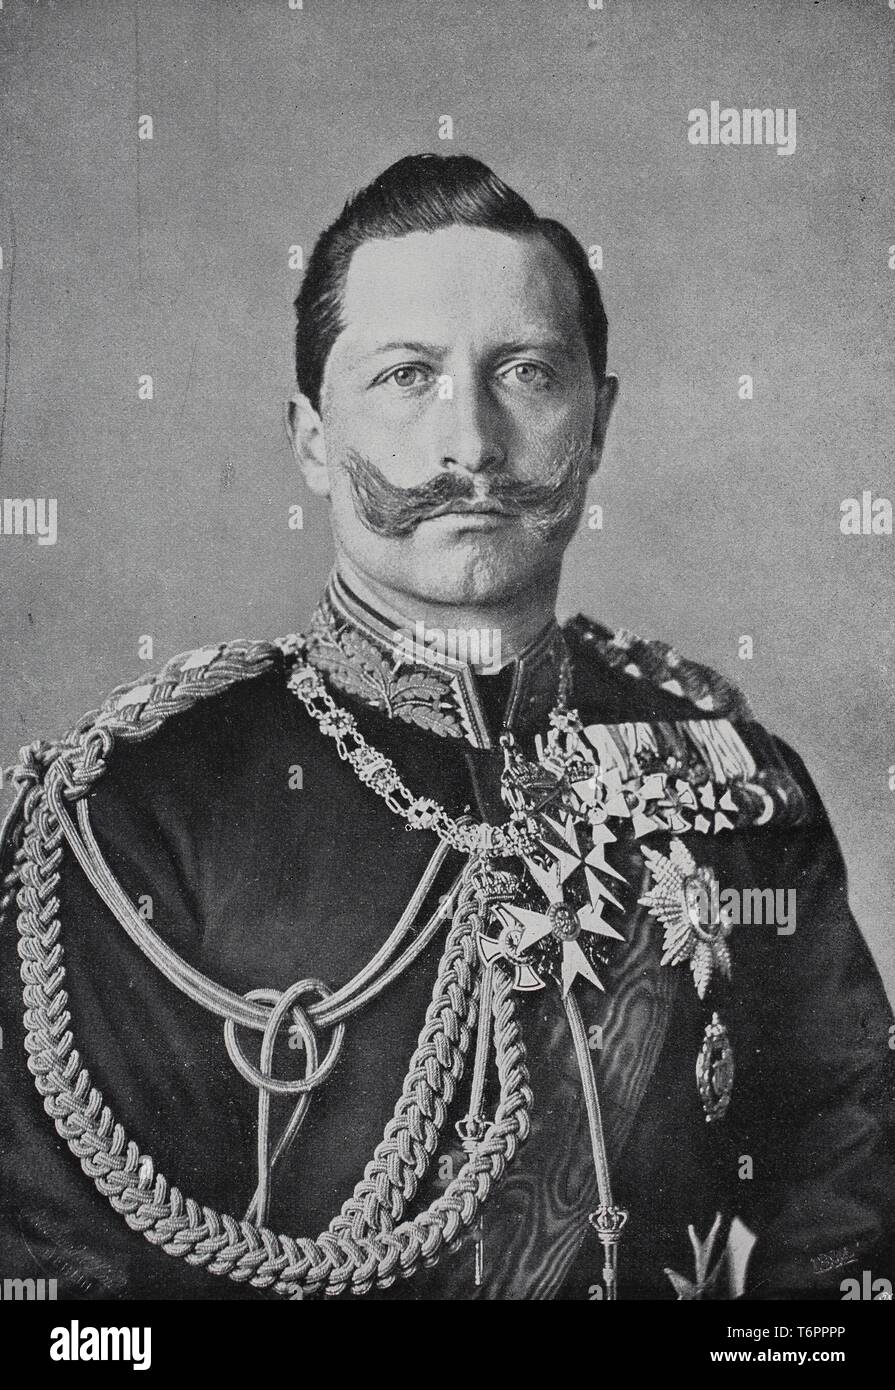 Wilhelm II, Friedrich Wilhelm Viktor Albert von Hohenzollern, the last German Emperor, 1880, historical illustration, Germany Stock Photo